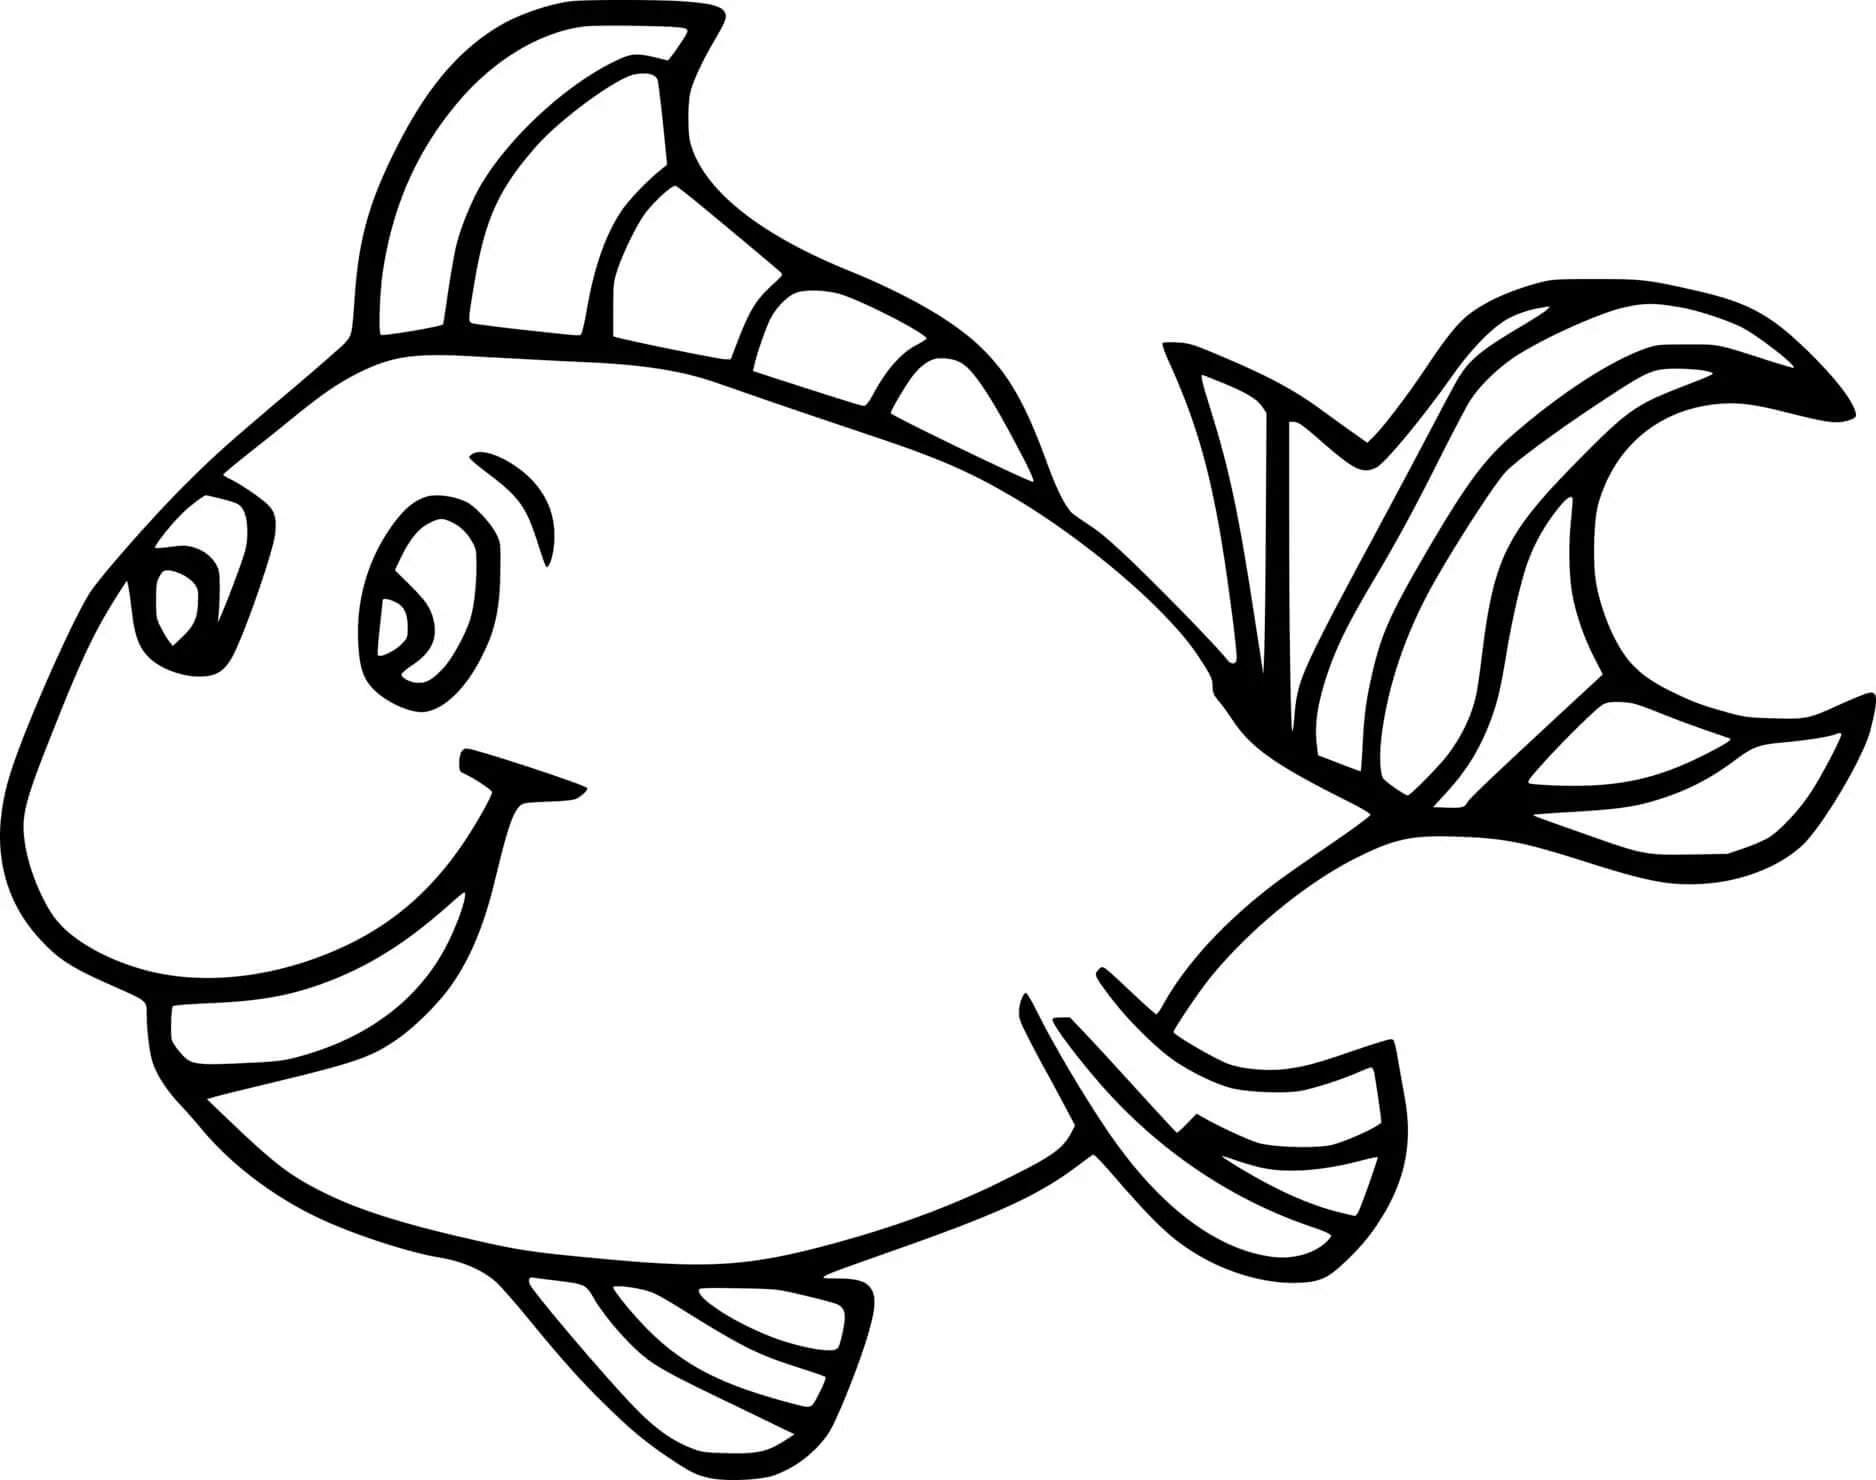 Раскраски рыбки для детей 3 4 лет. Раскраска рыбка. Рыба раскраска для детей. Рыбка раскраска для детей. Рыбка для раскрашивания для детей.